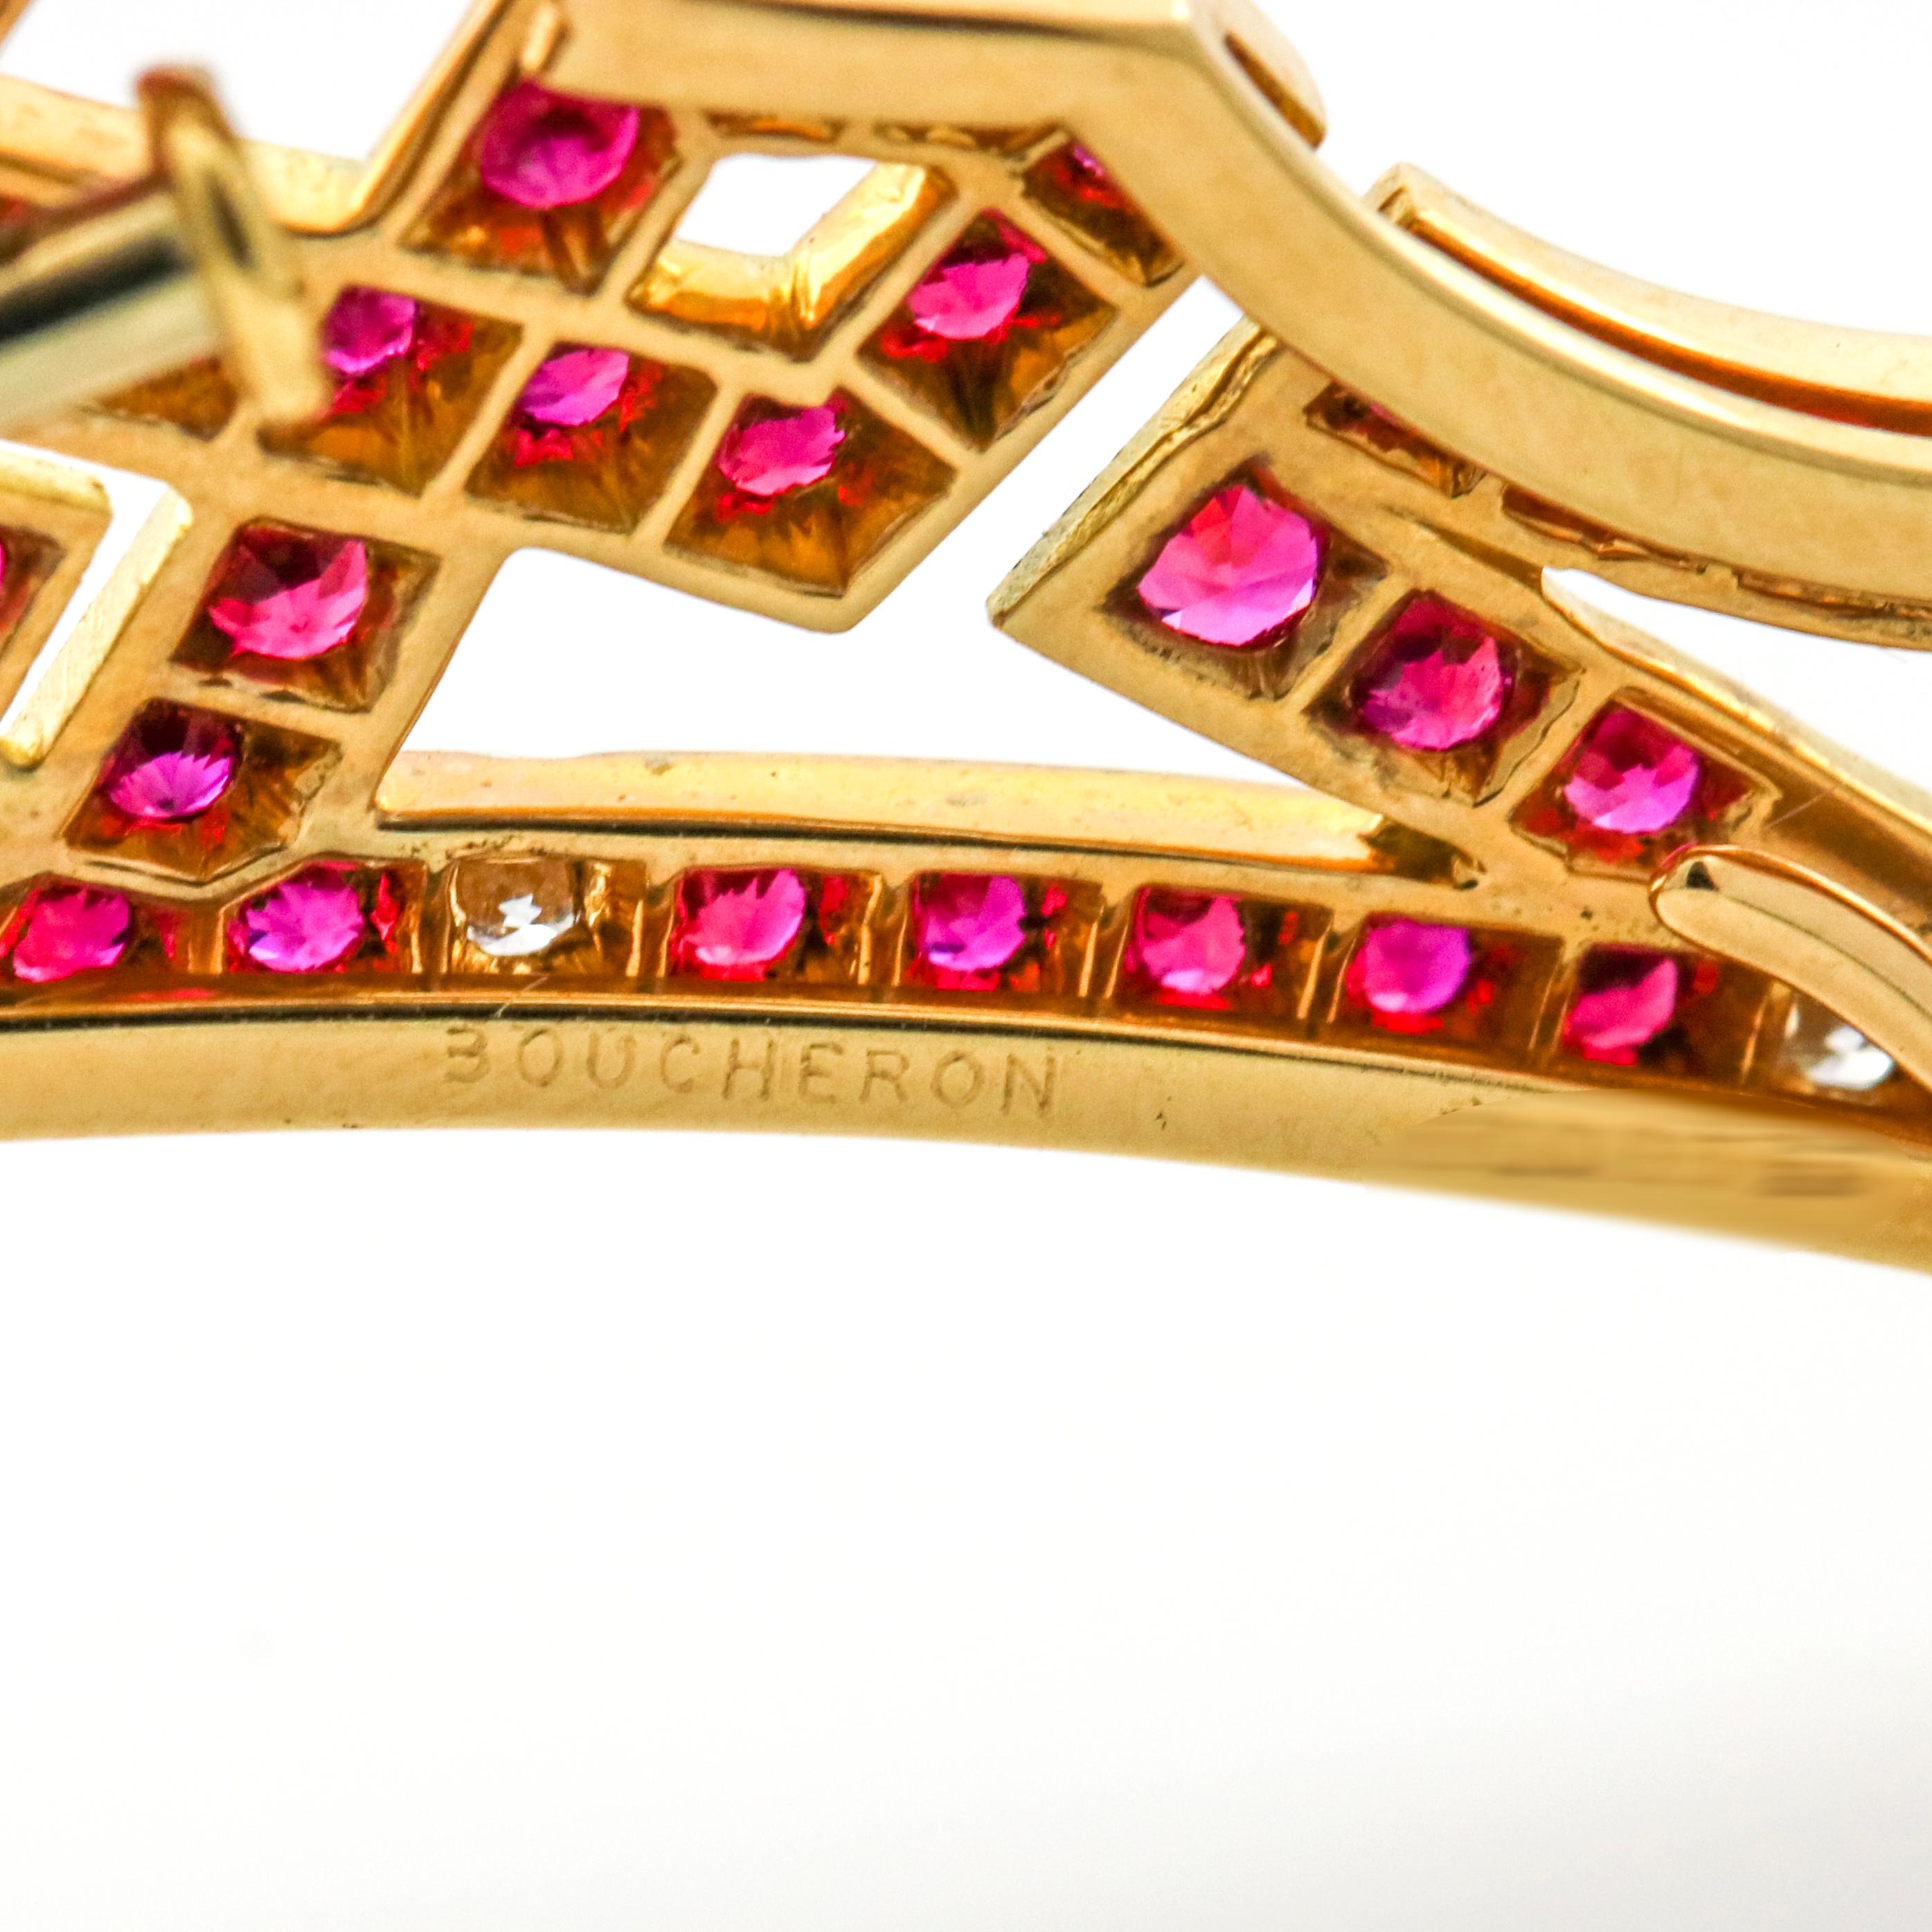 Boucheron 18 Karat Gold Eiffel Tower Ruby Diamond Brooch In Excellent Condition For Sale In Fort Lauderdale, FL